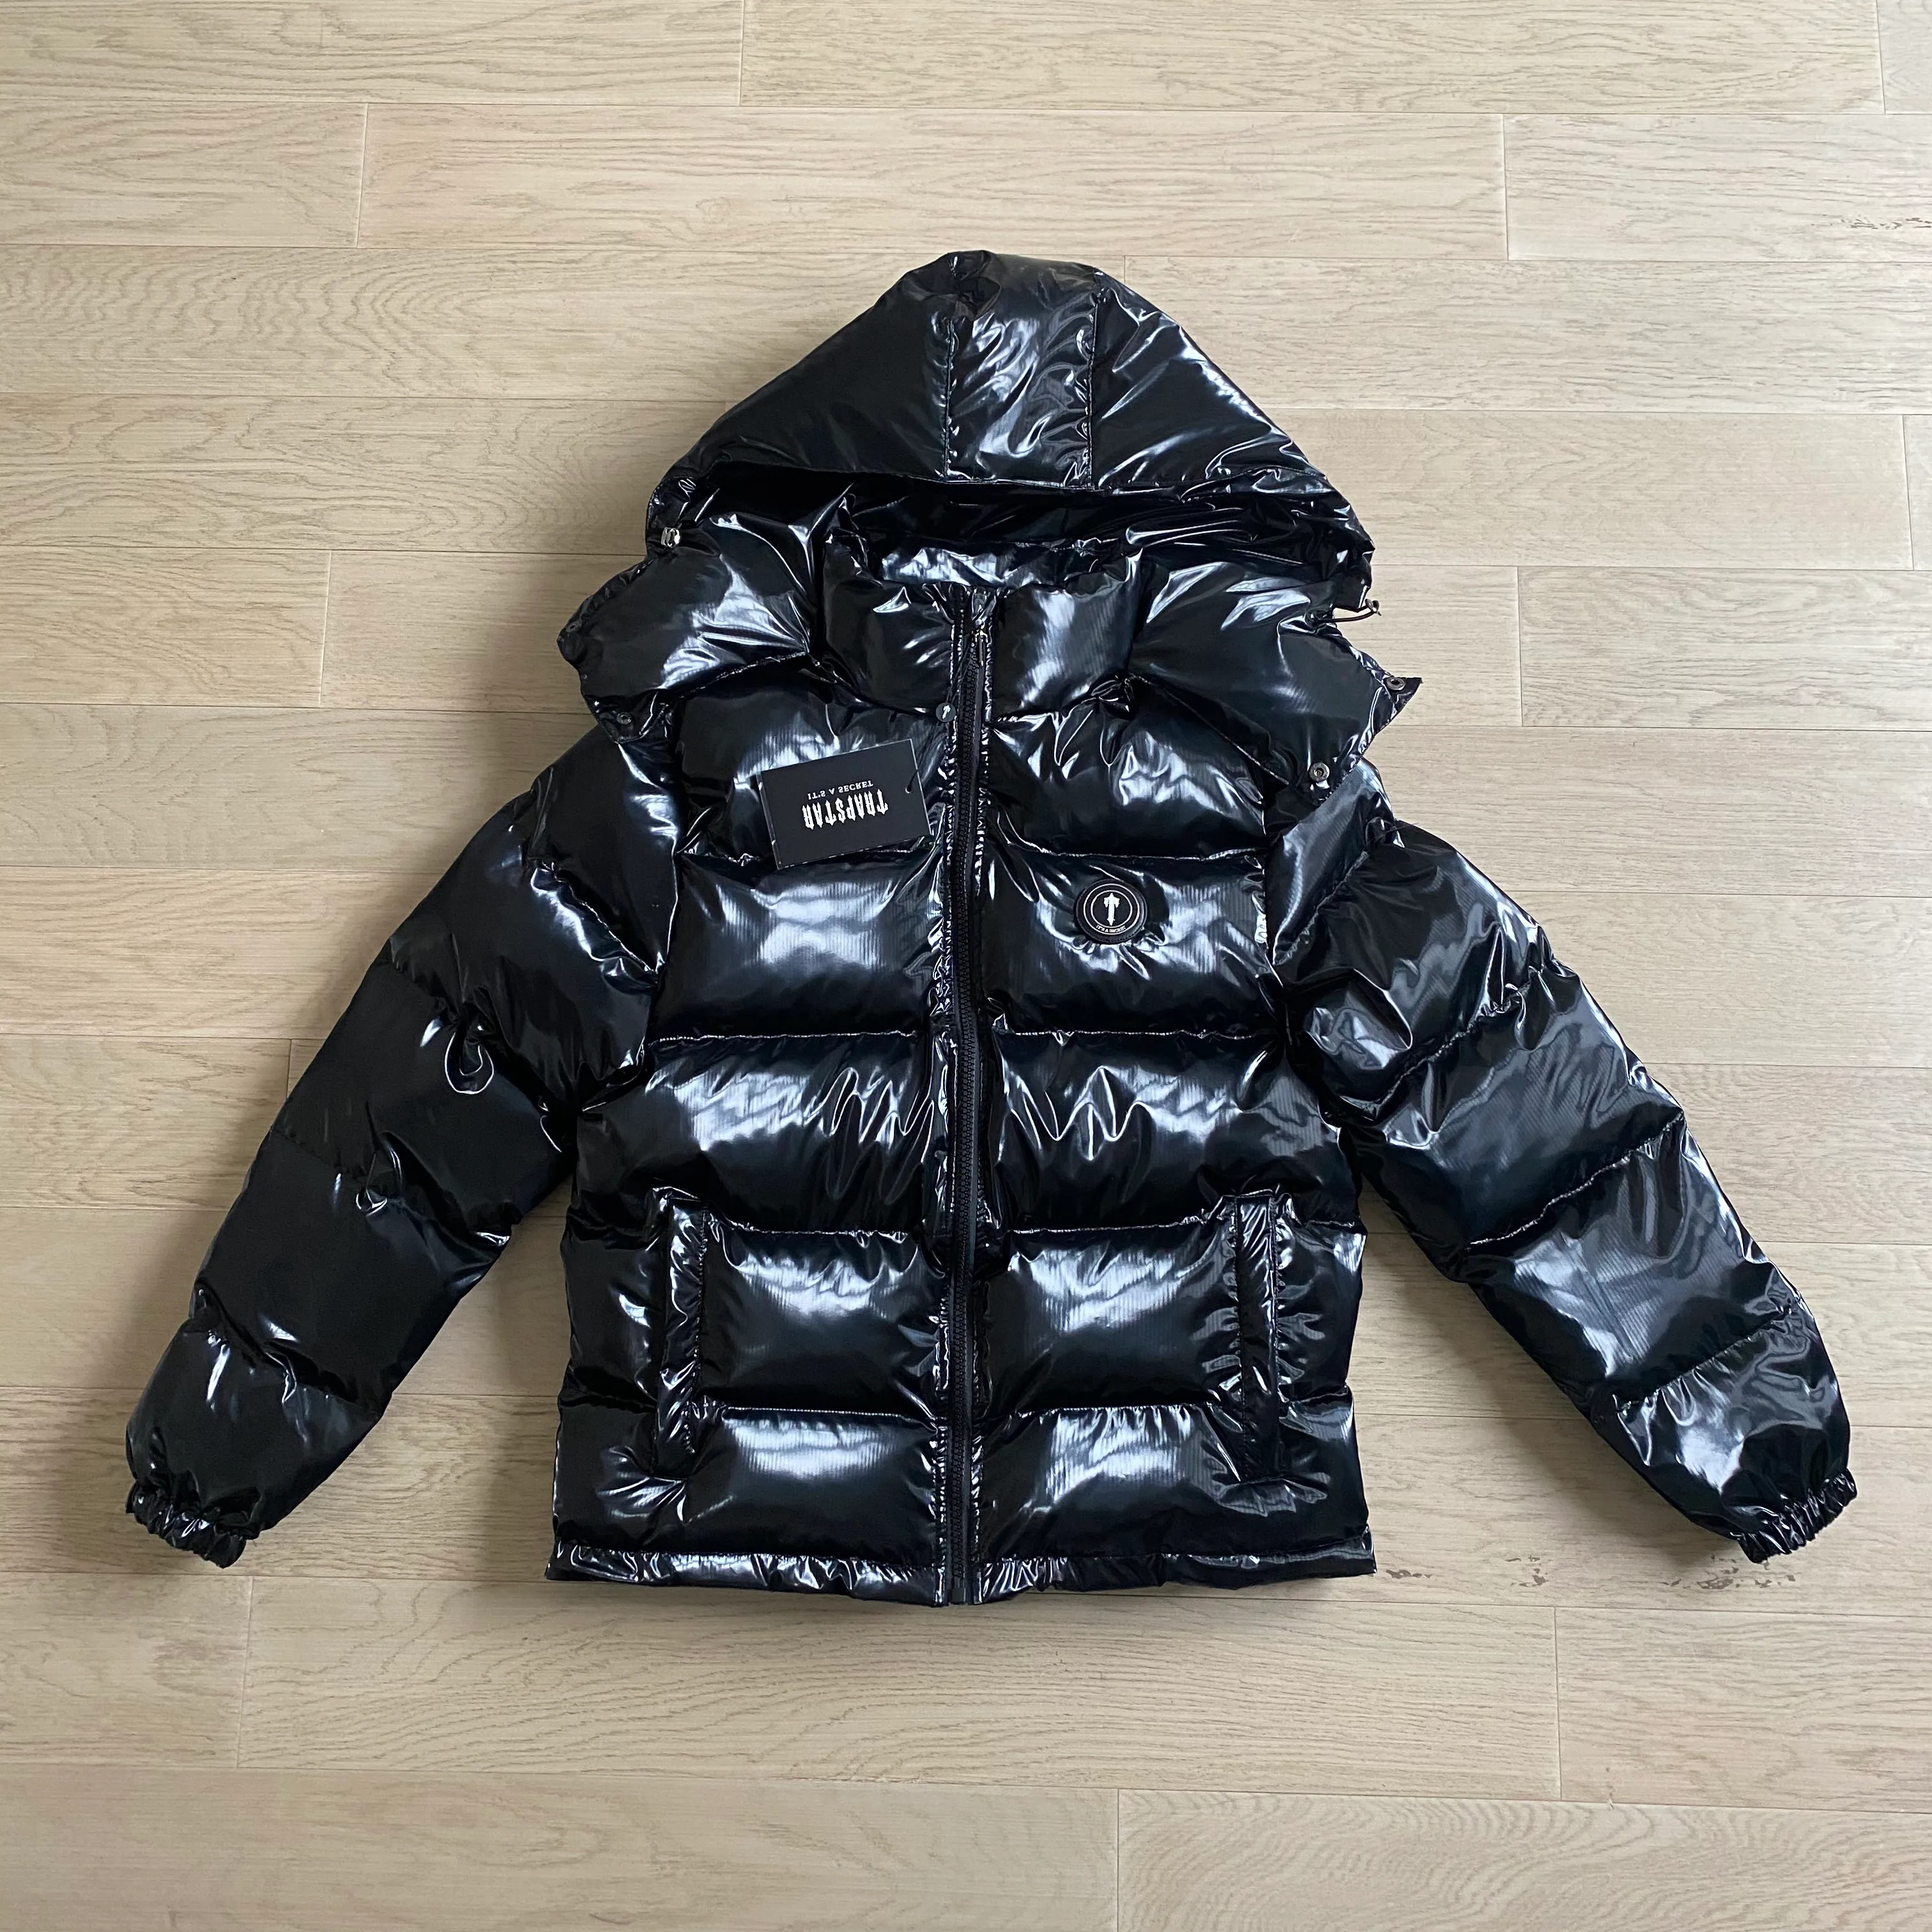 Trapstar Irongate pufferjacket with Detachable Hood (Gloss black)